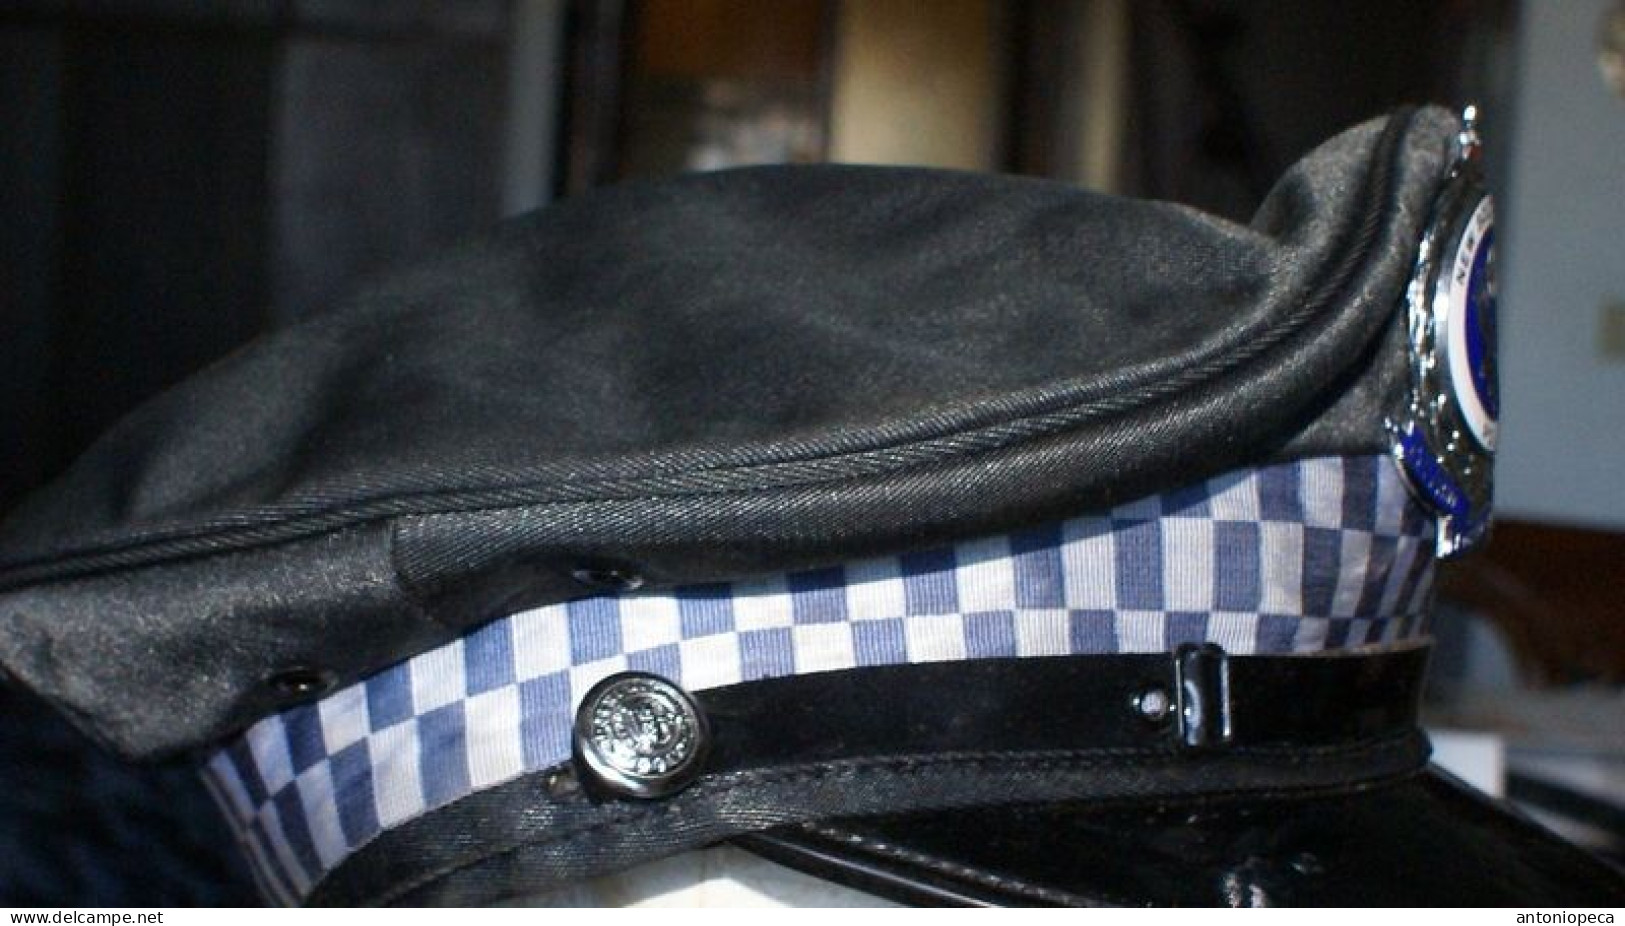 AUSTRALIAN POLICE (NEW SOUTH WALES) CAP - Headpieces, Headdresses